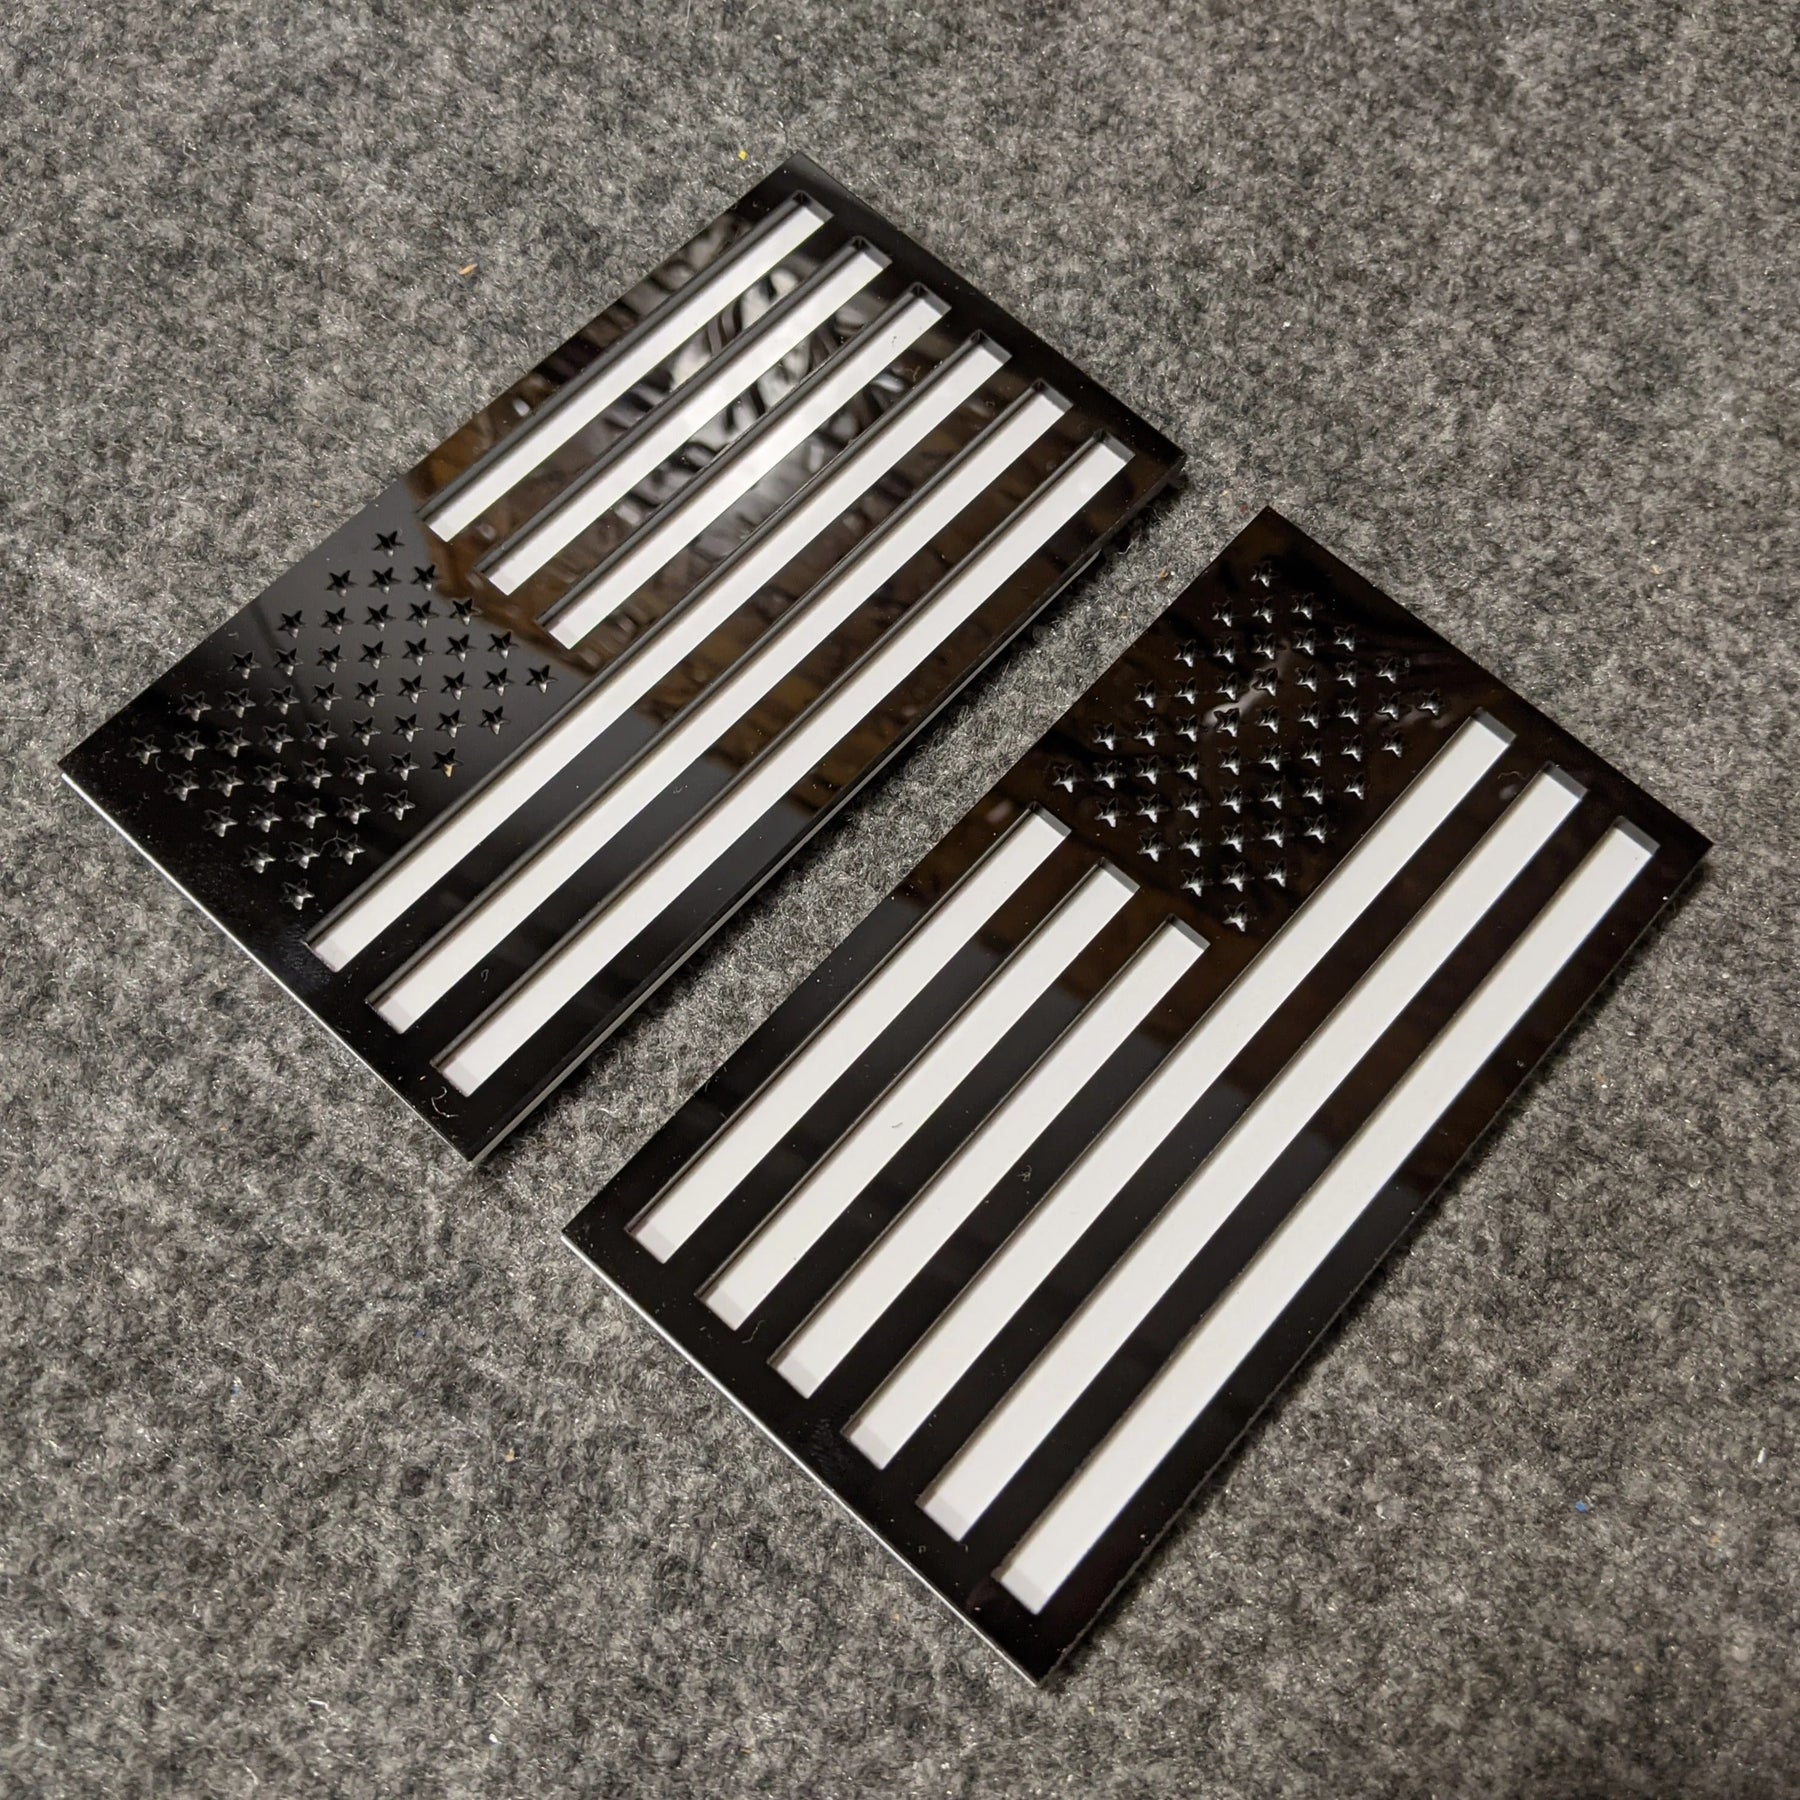 American Flag Fender Badges - Pair - Universal Fit - Black on White